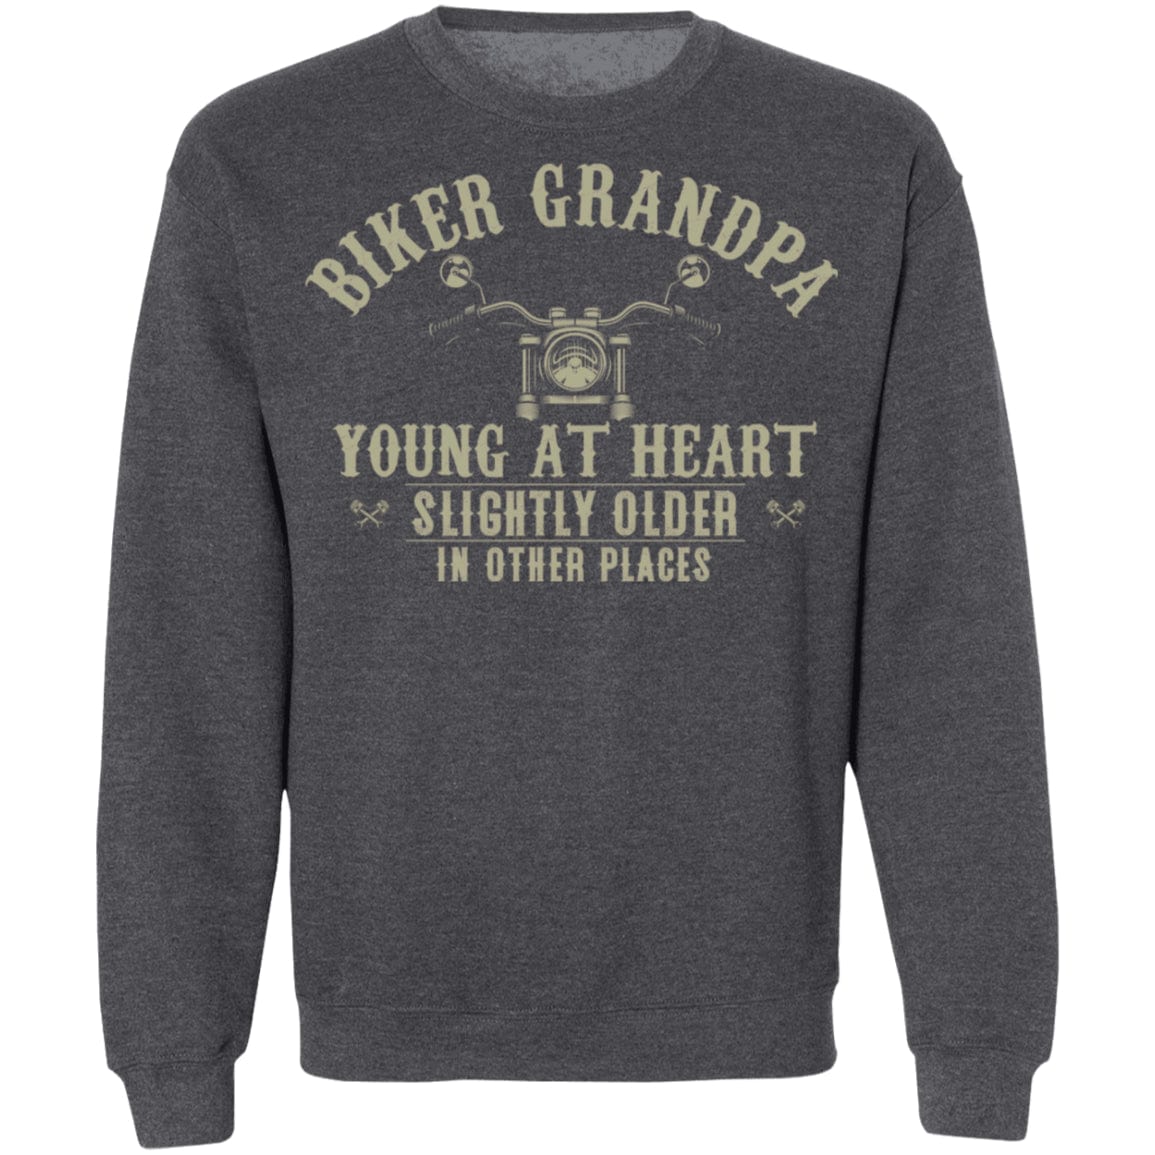 Young At Heart Biker Grandpa Shirt